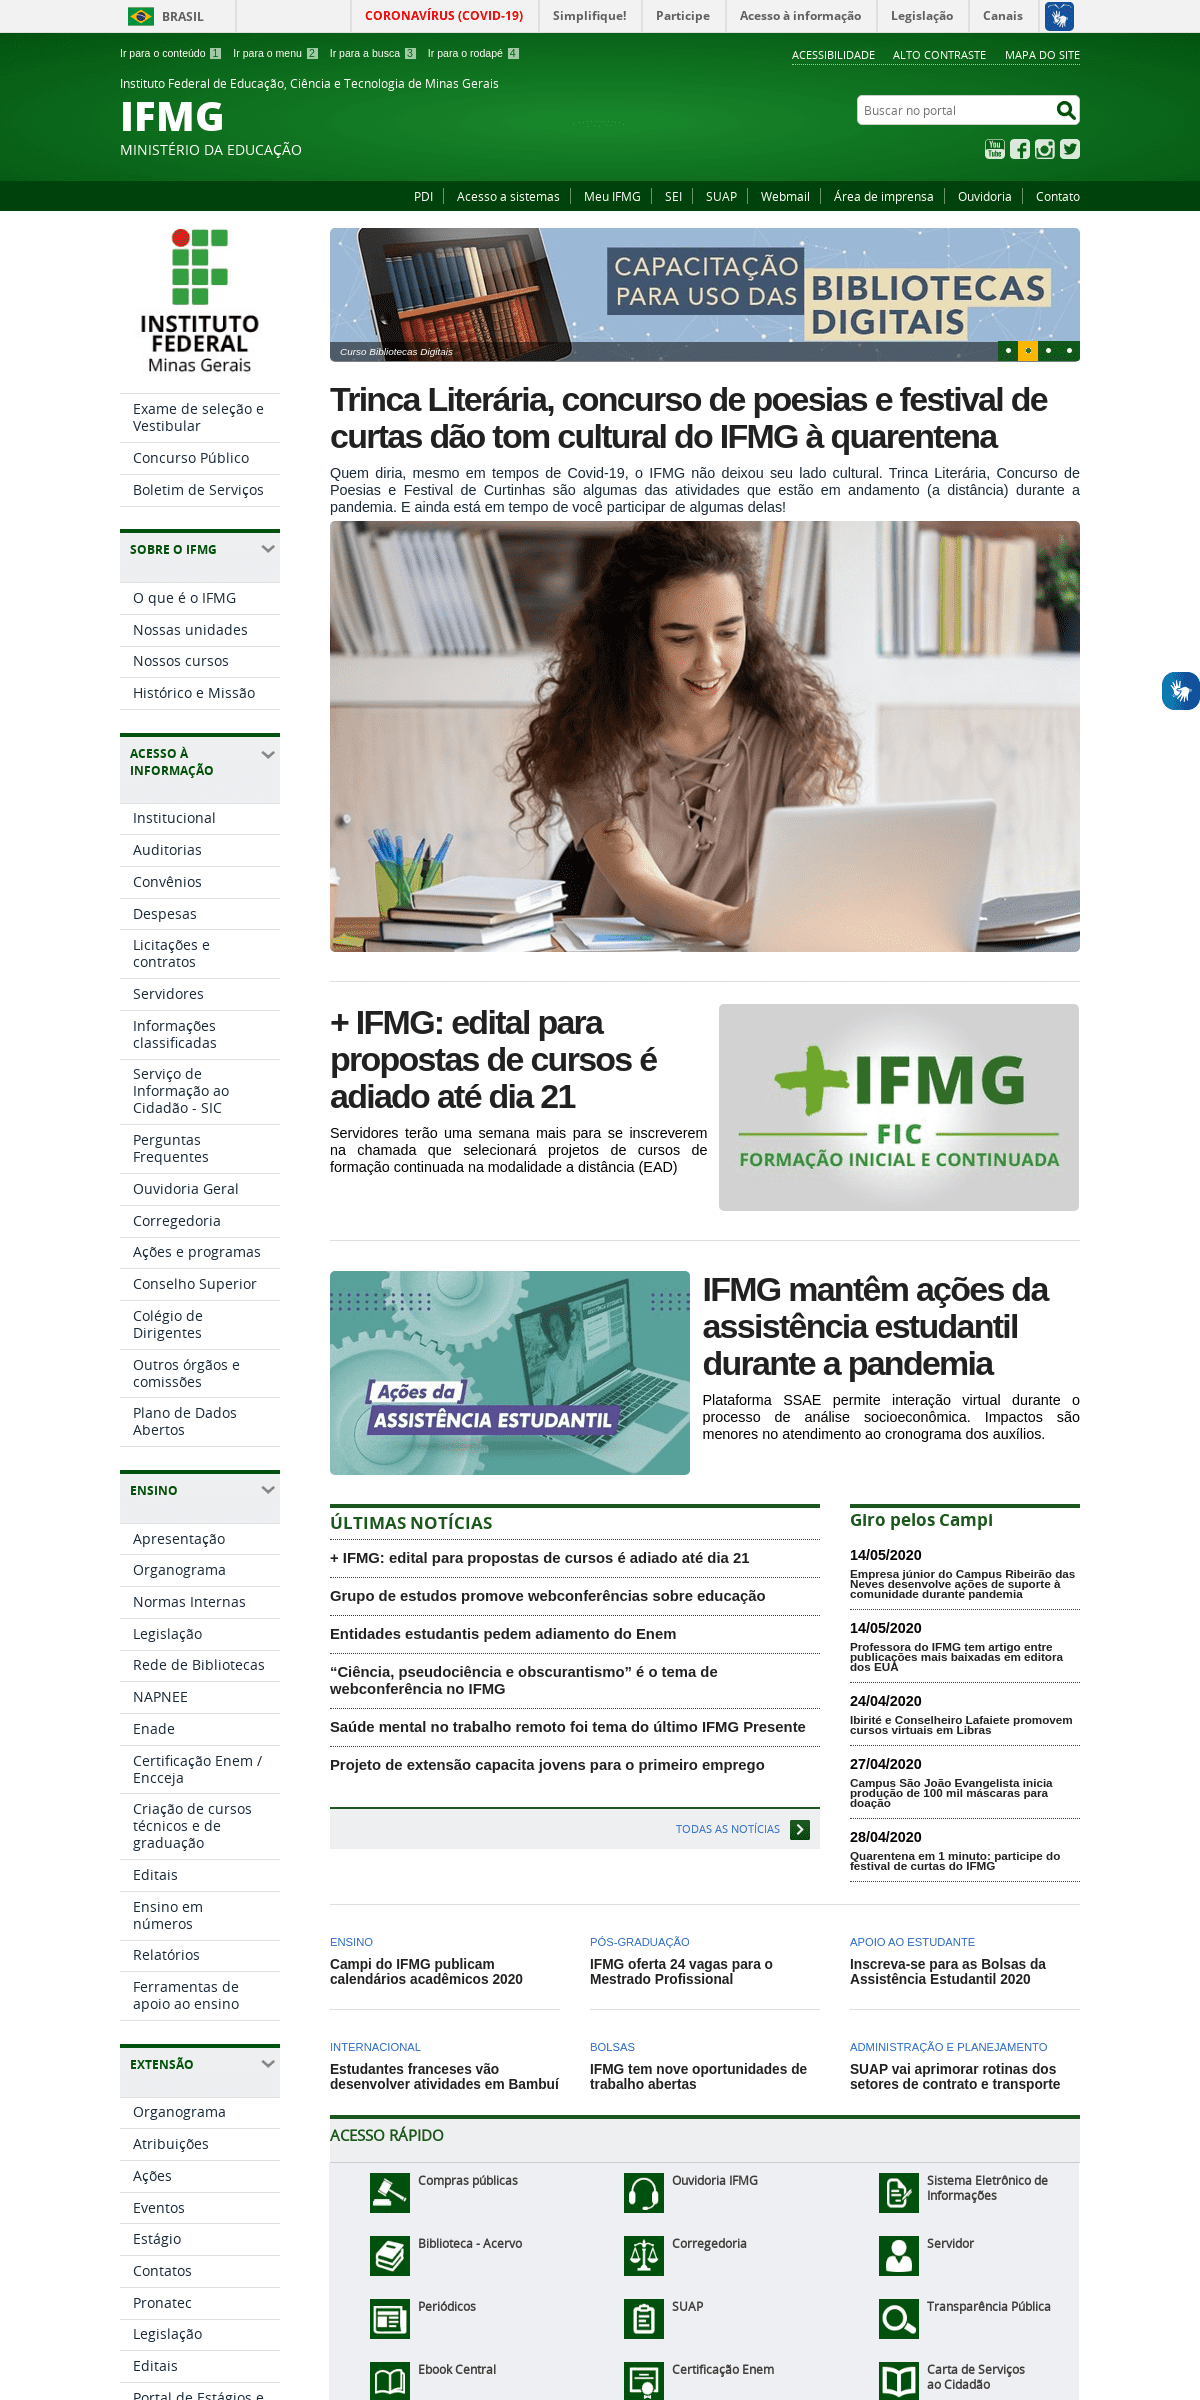 A complete backup of ifmg.edu.br